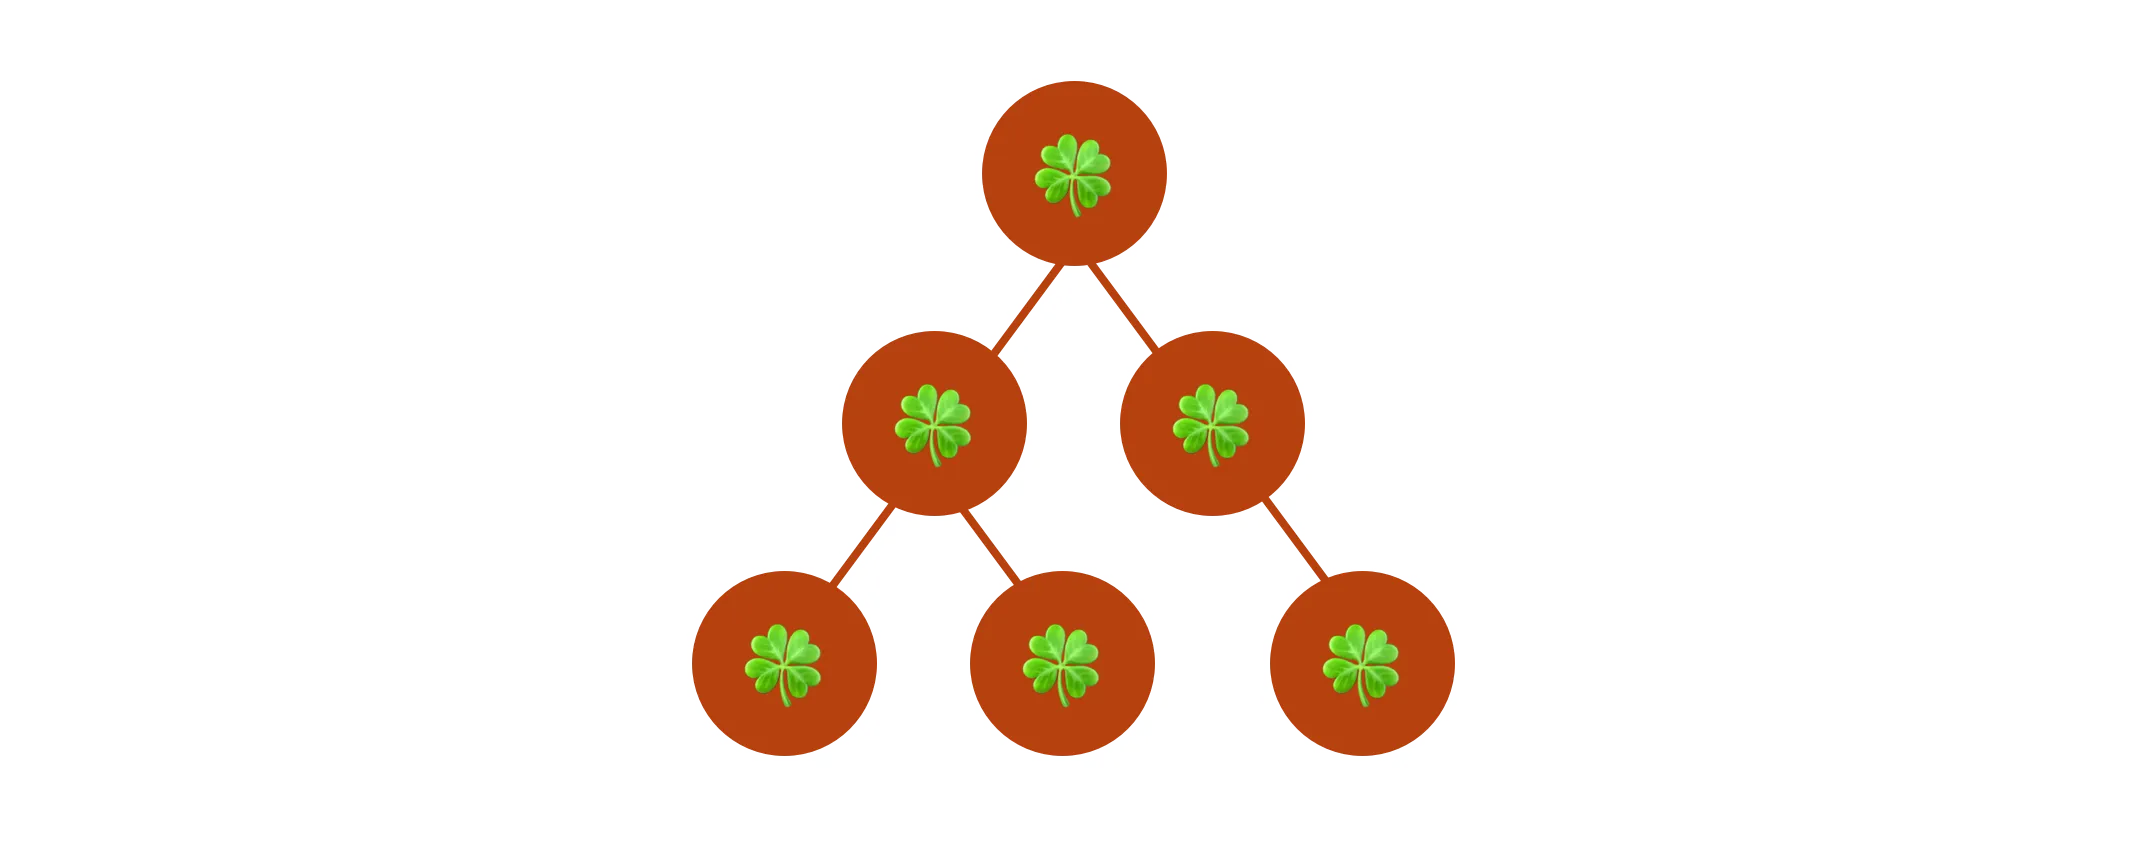 Binary tree data structure visualization